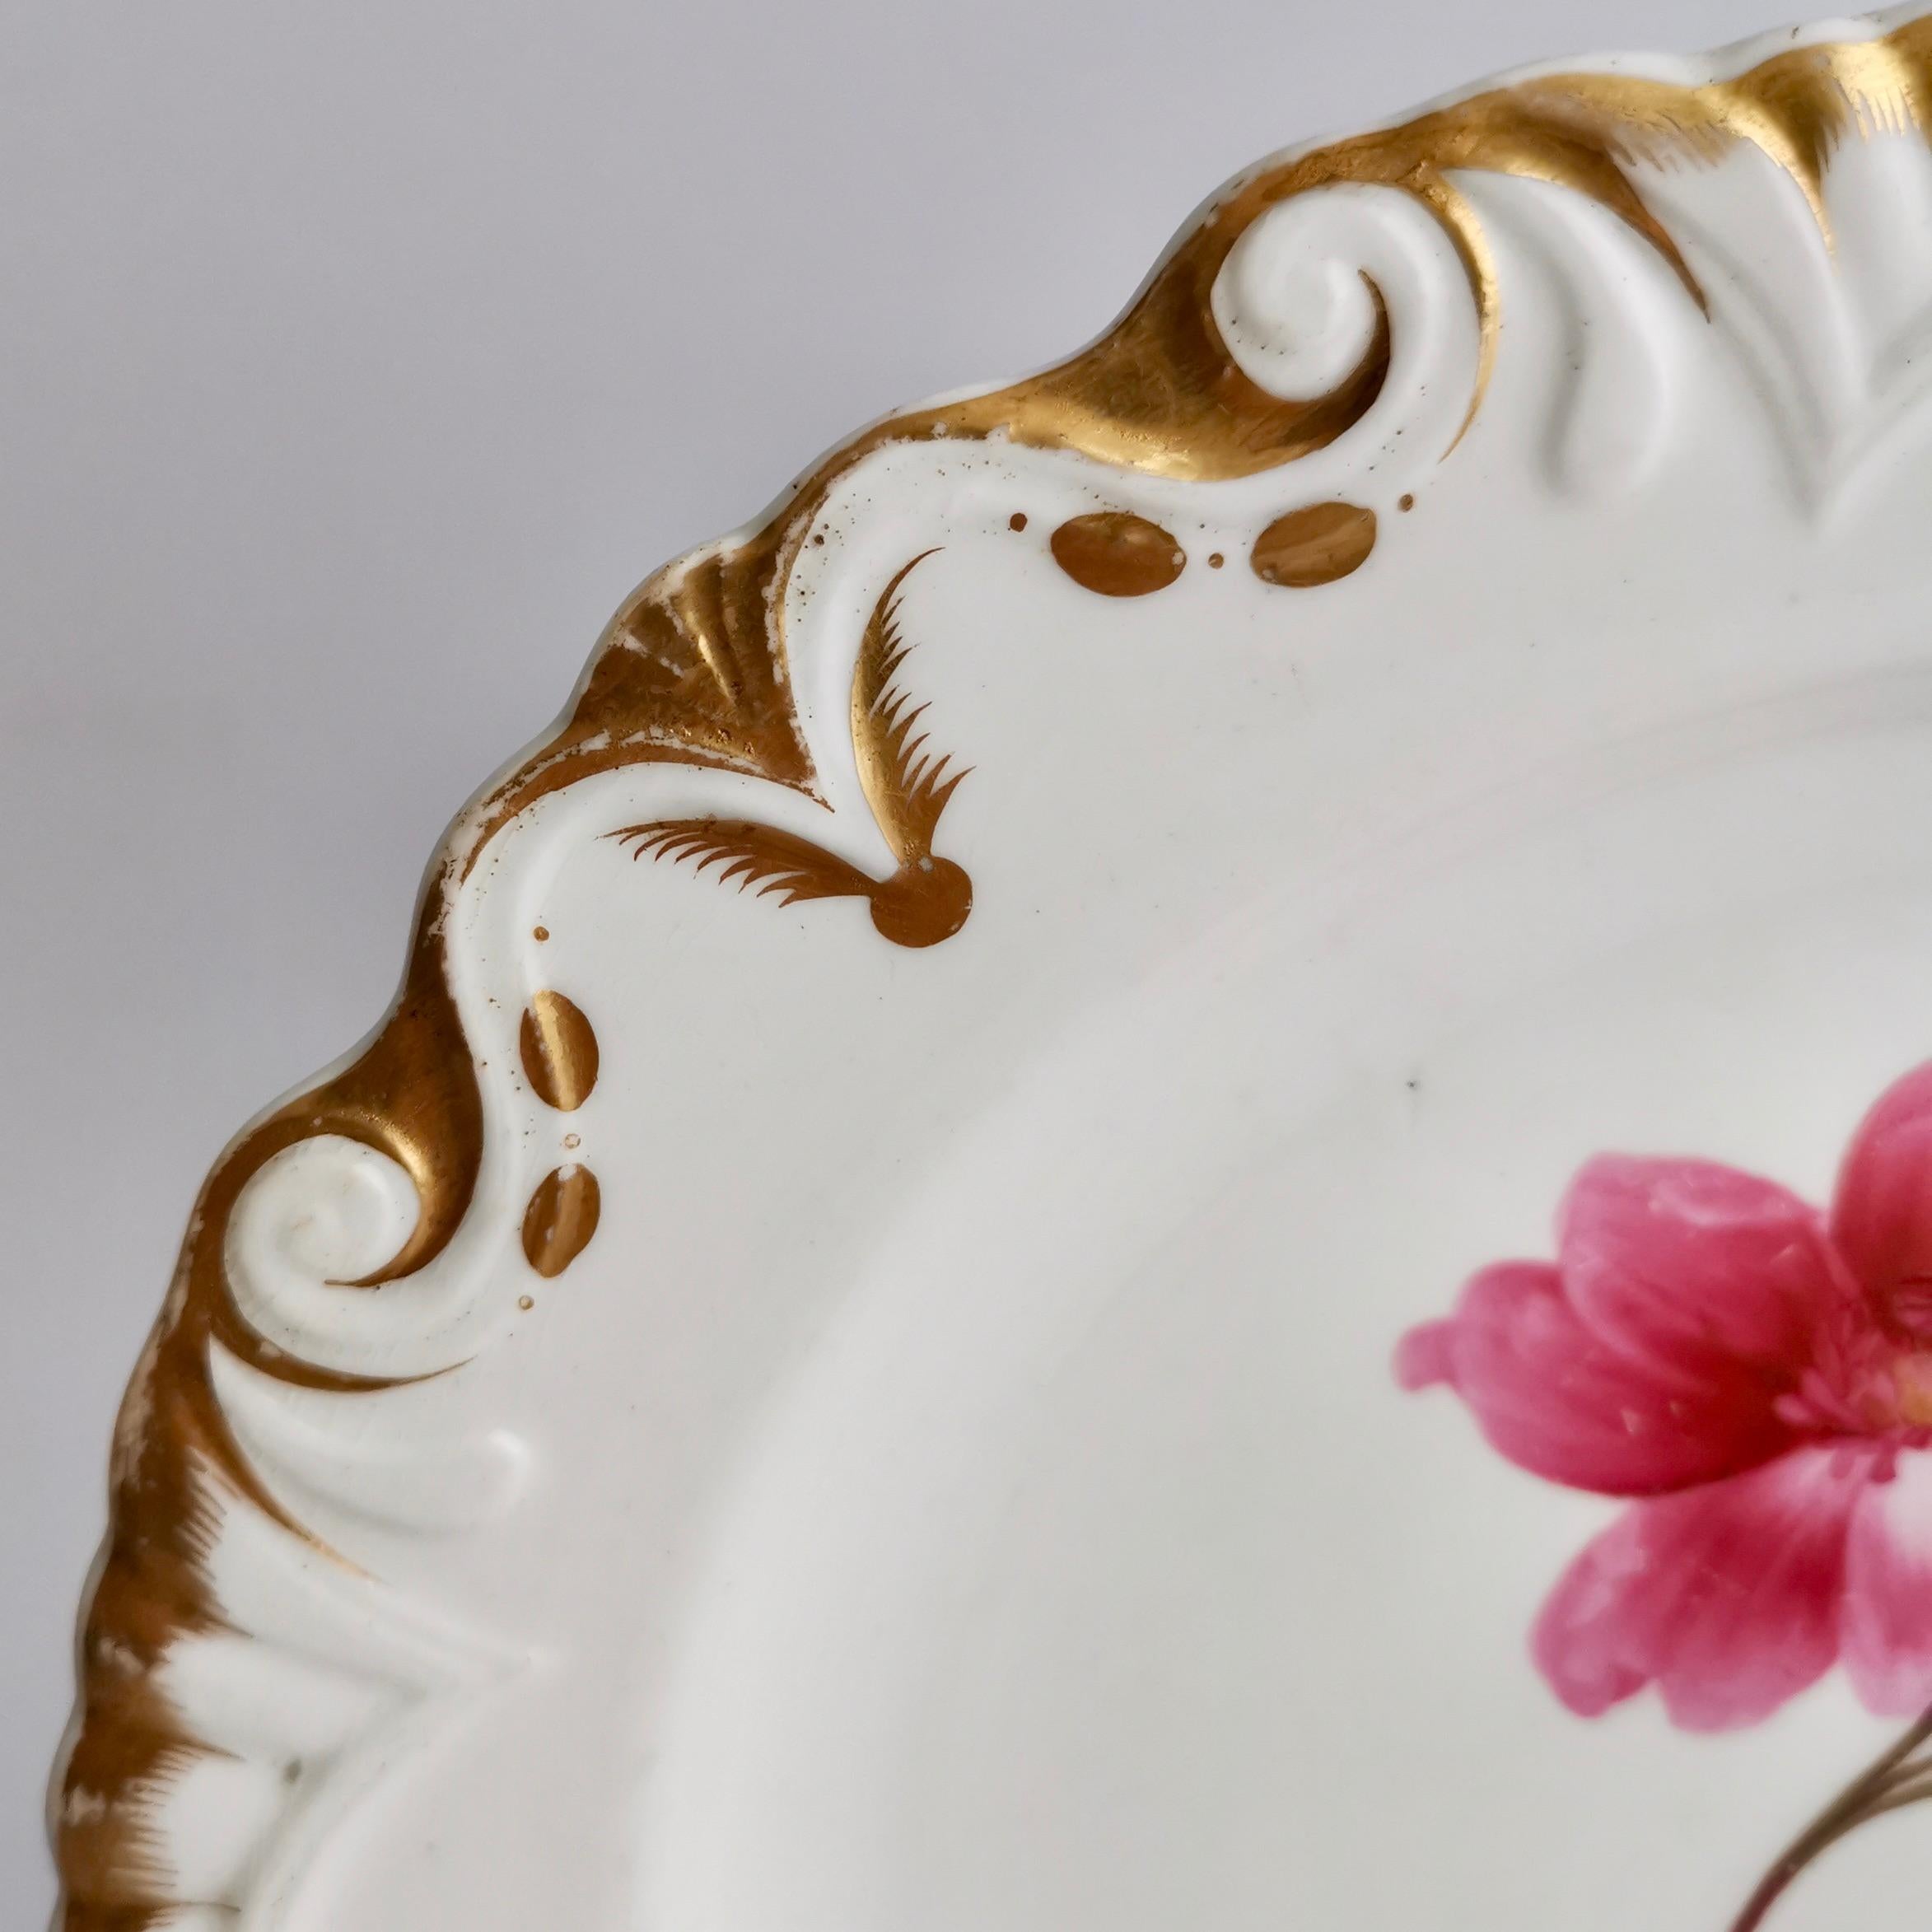 Machin Porcelain Plate, White, Moustache Shape with Pink Flower, Regency 1